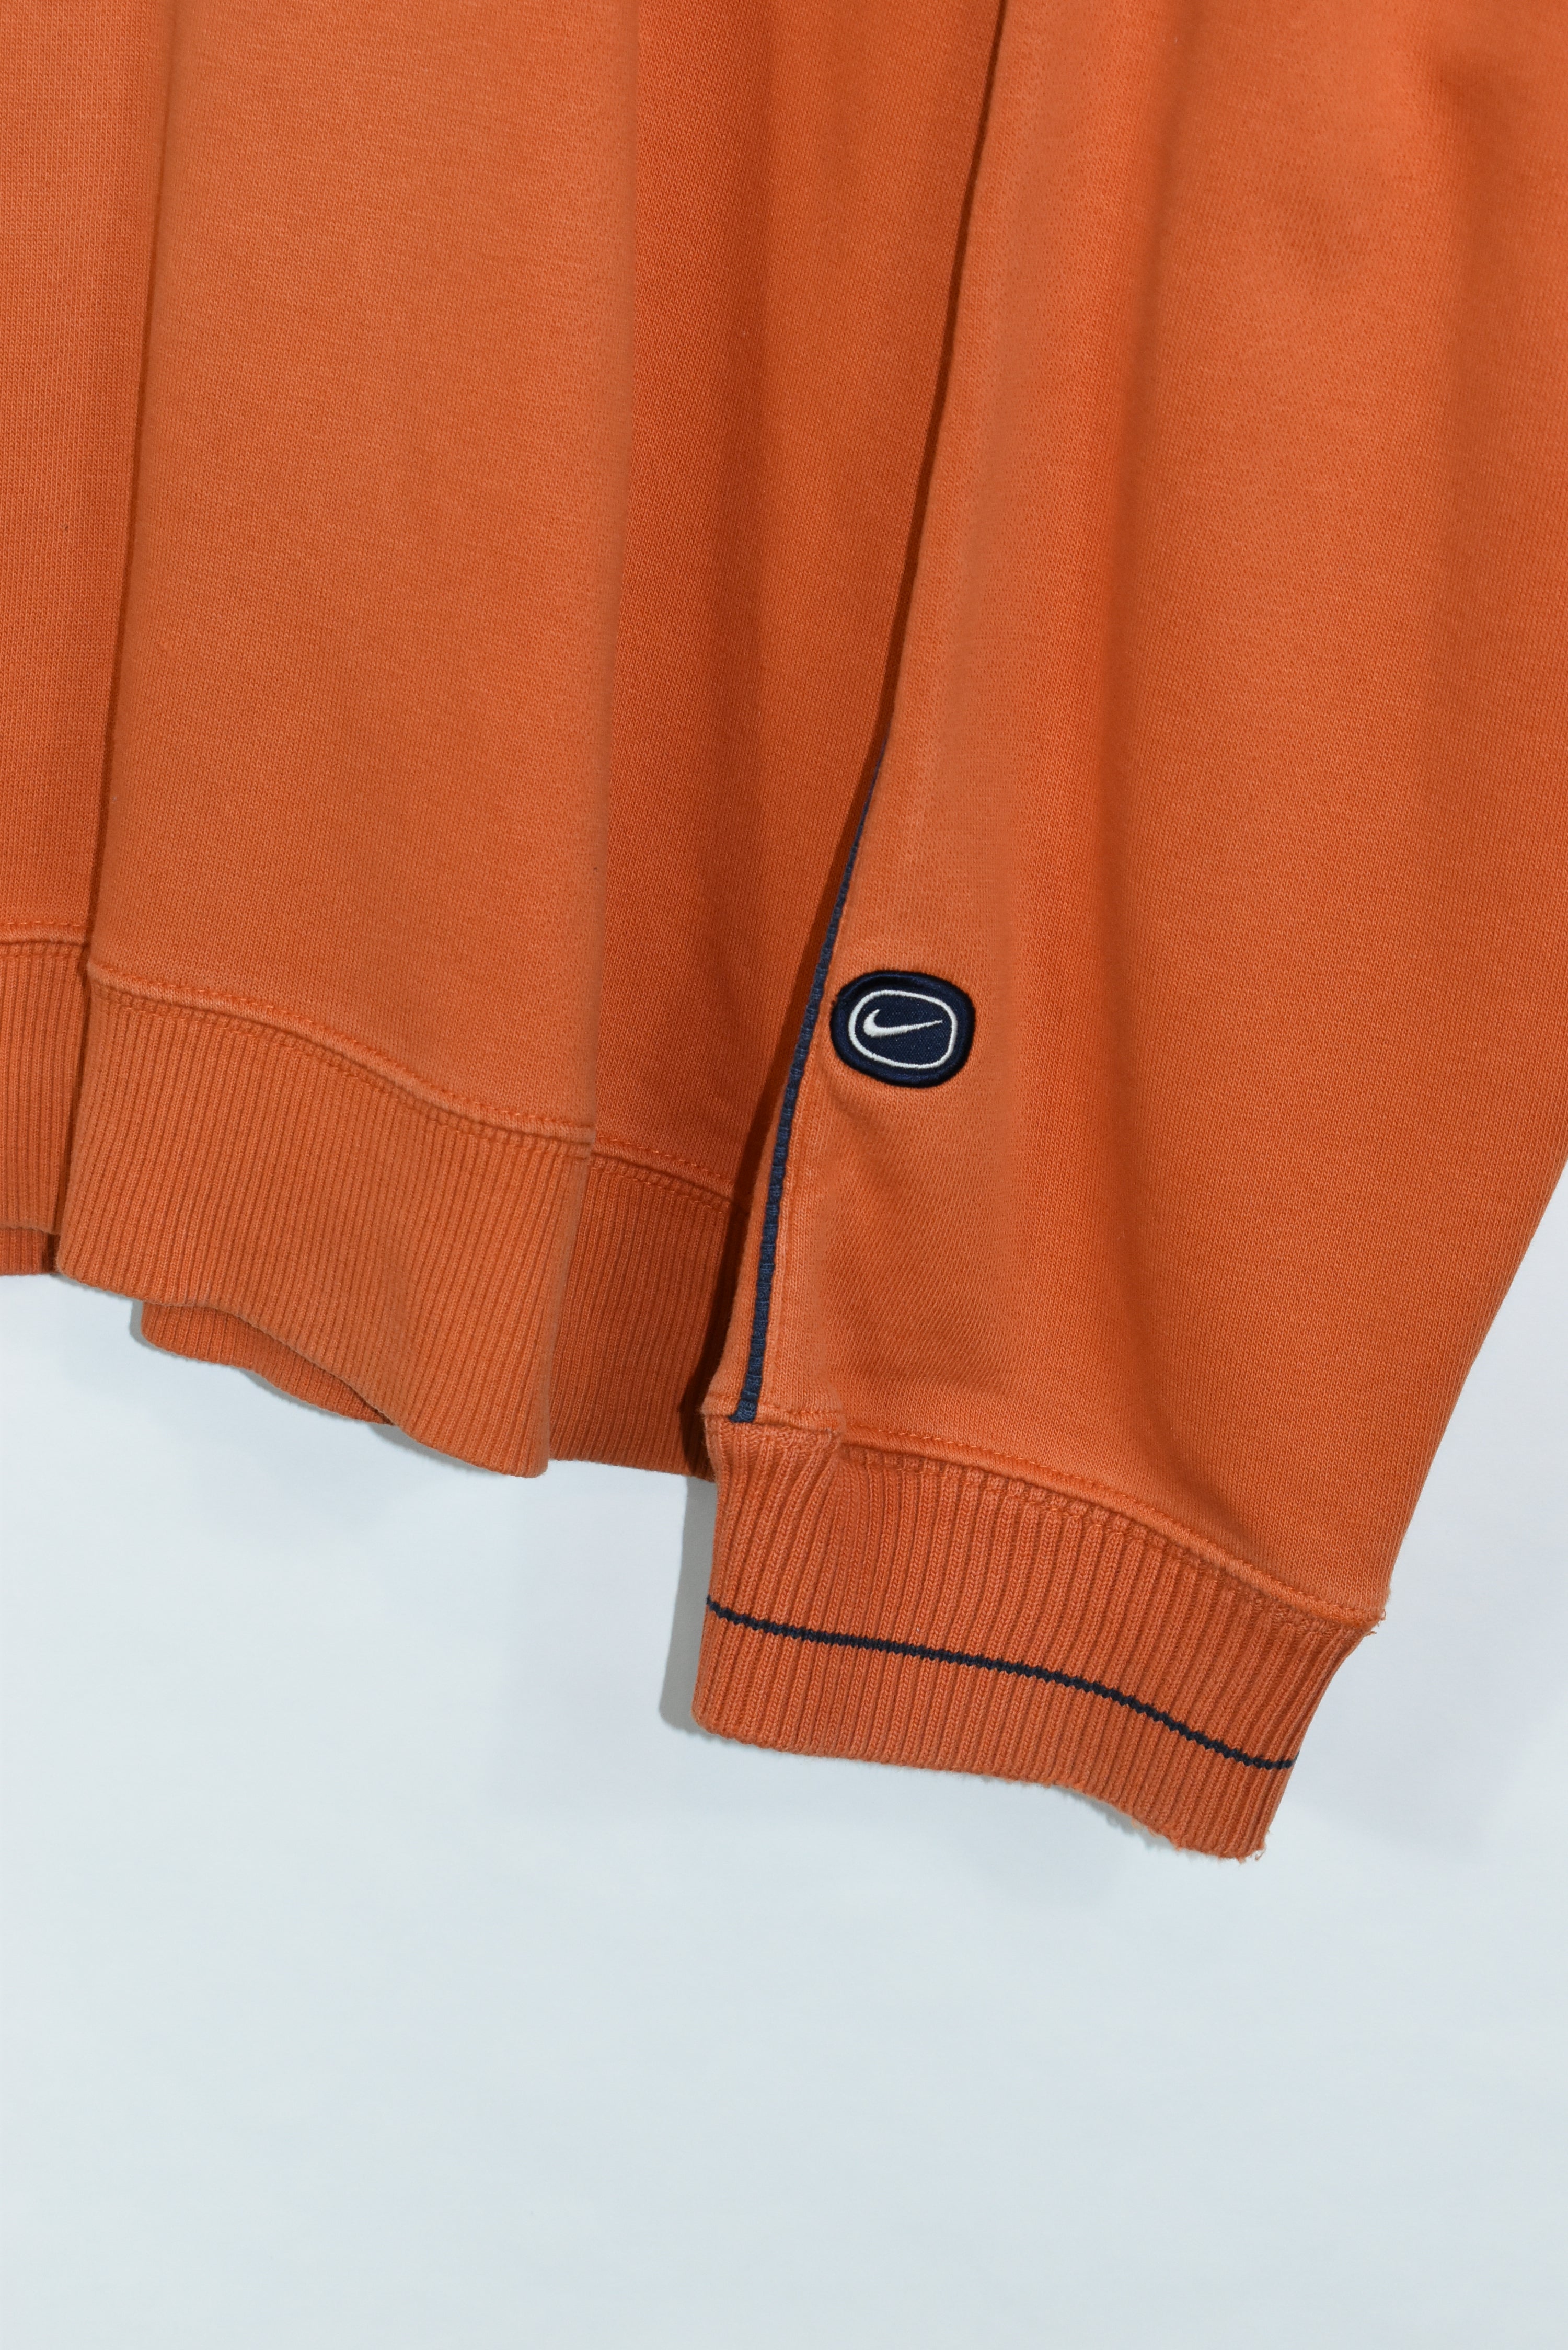 Vintage Nike Embroidery Orange Sweatshirt LARGE (Baggy)